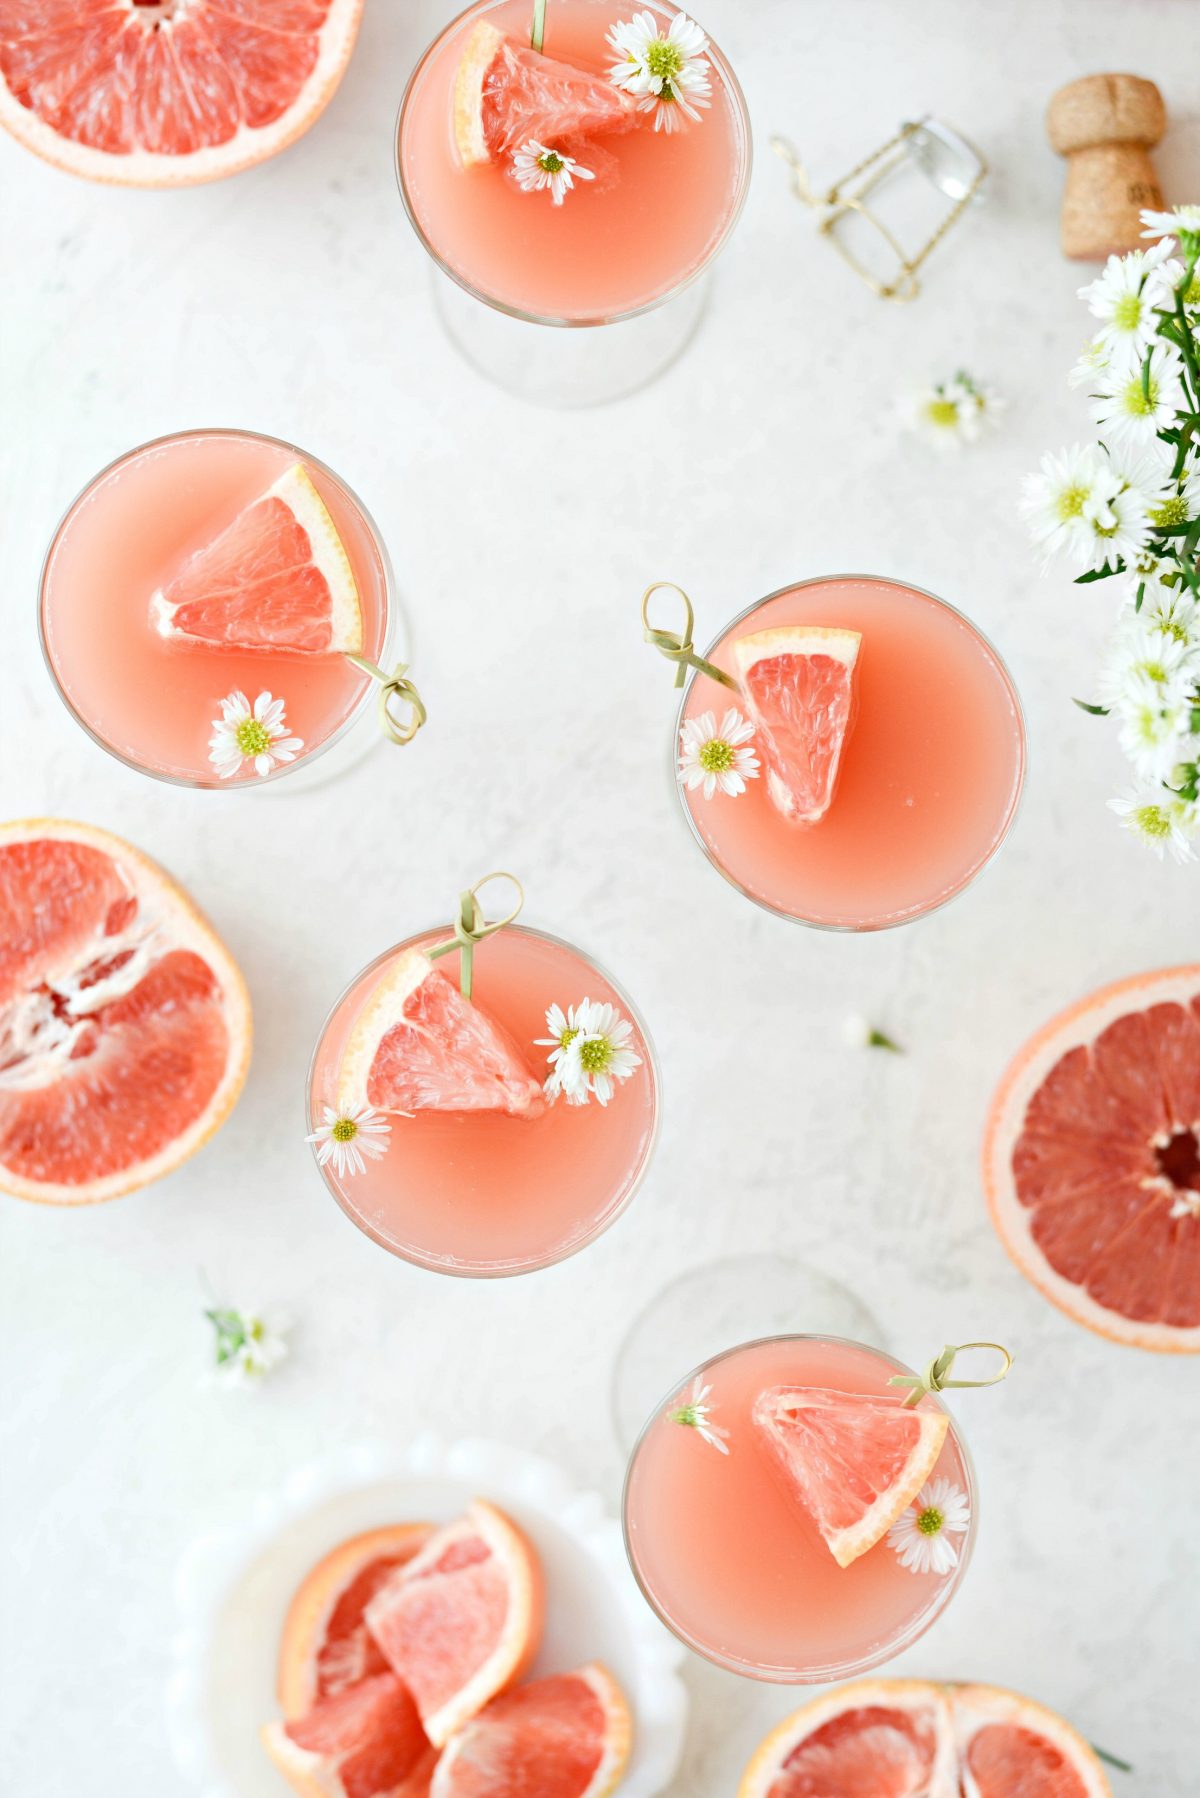 grepfrut Rosa Xtrasex Mimosas l SimplyScratch.com # adult # beverage # grapefruit # rose # mimosa # easter # brunch # mothersday